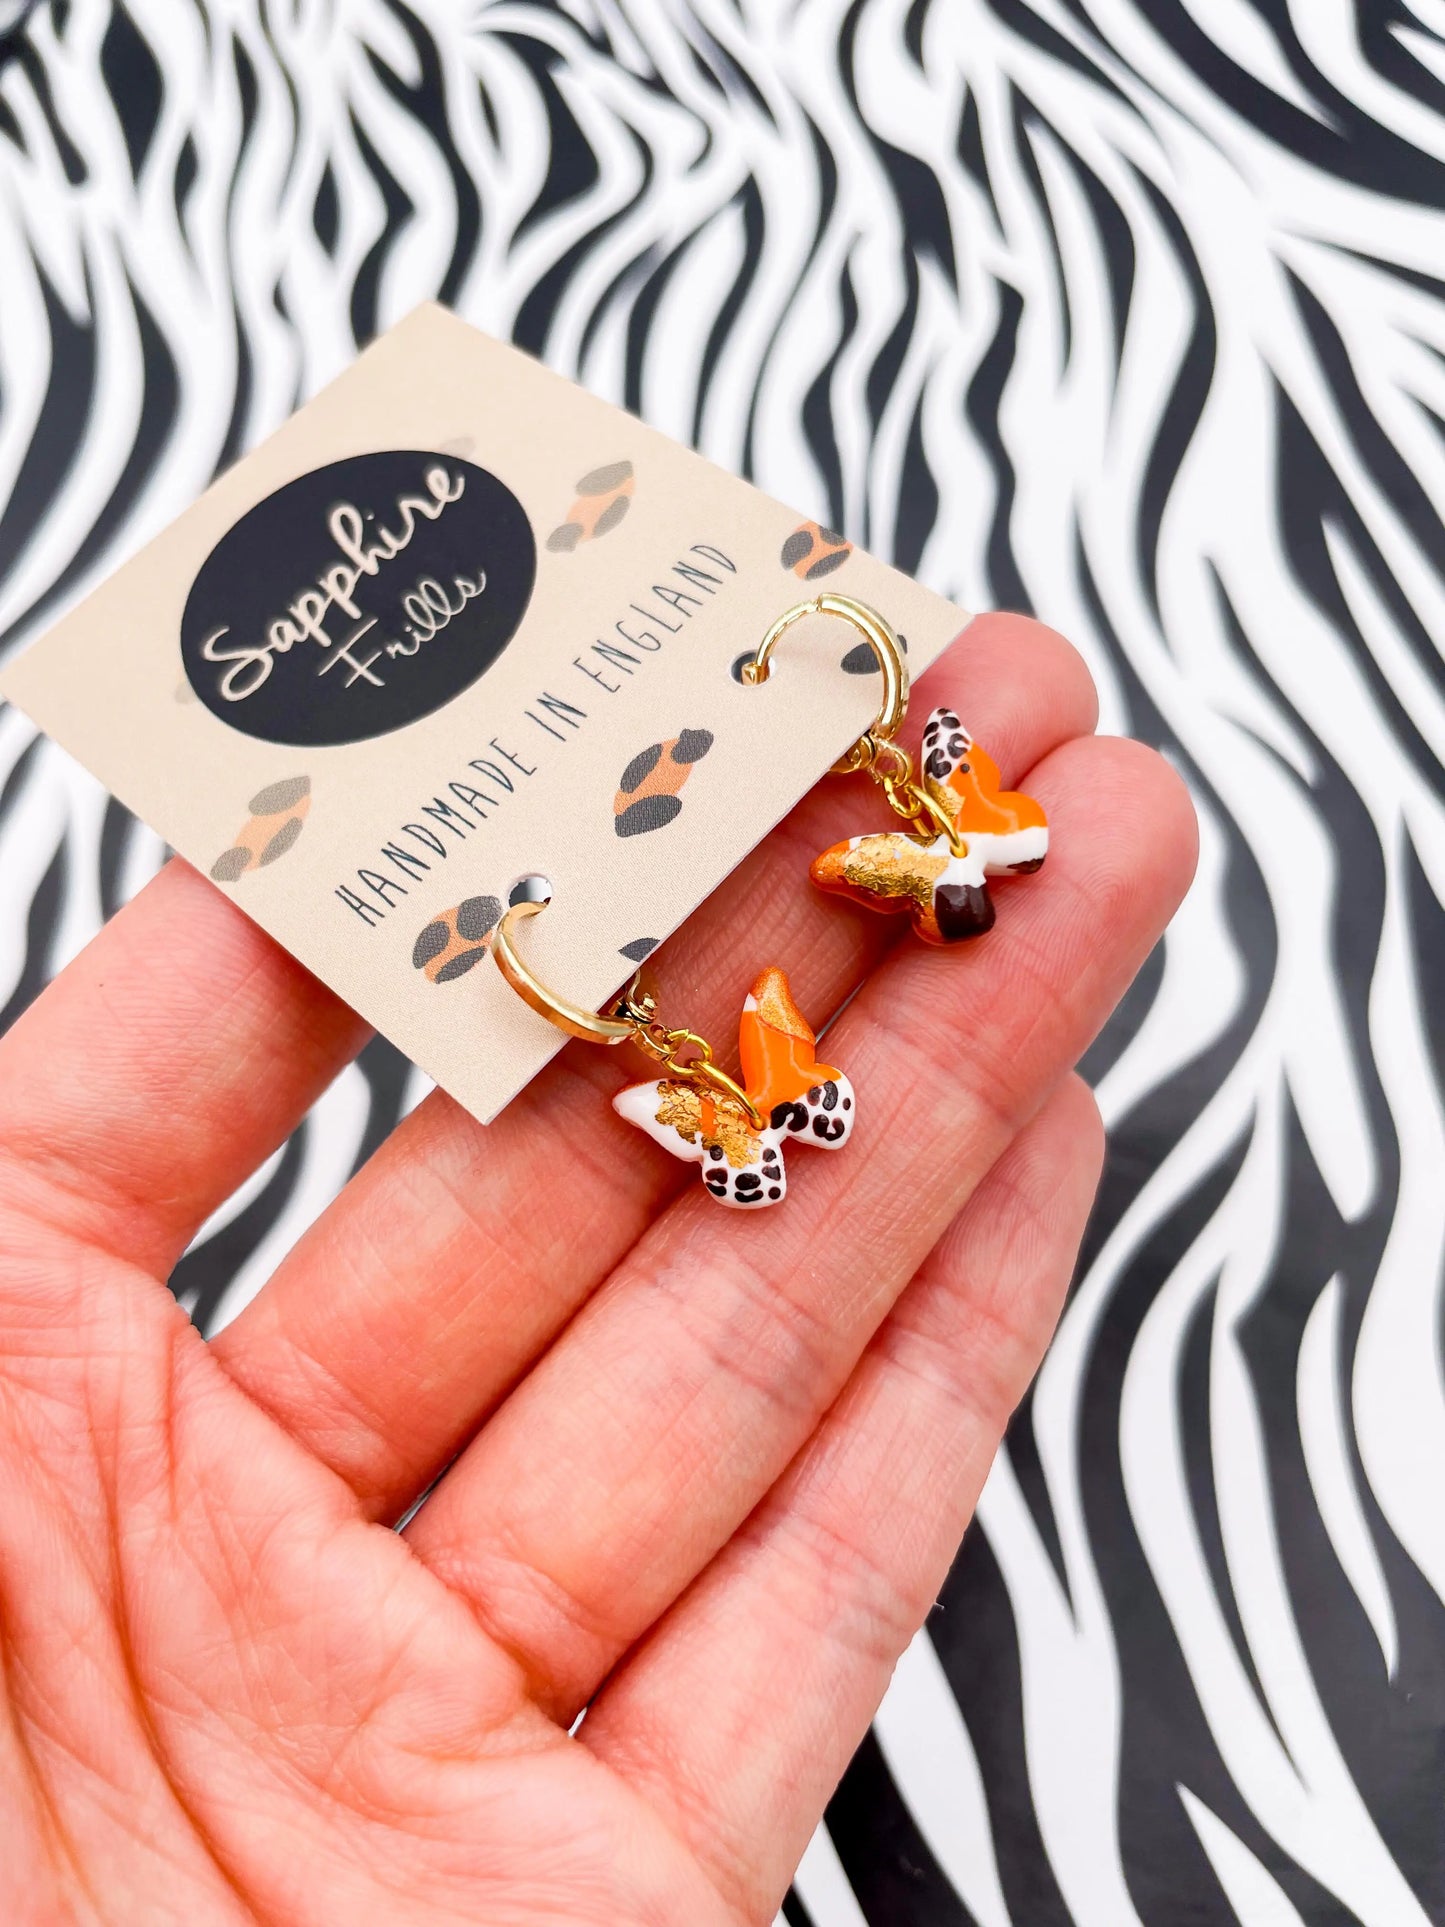 Mini Autumn Jungle Leopard Print Butterfly Stud Earrings from Sapphire Frills